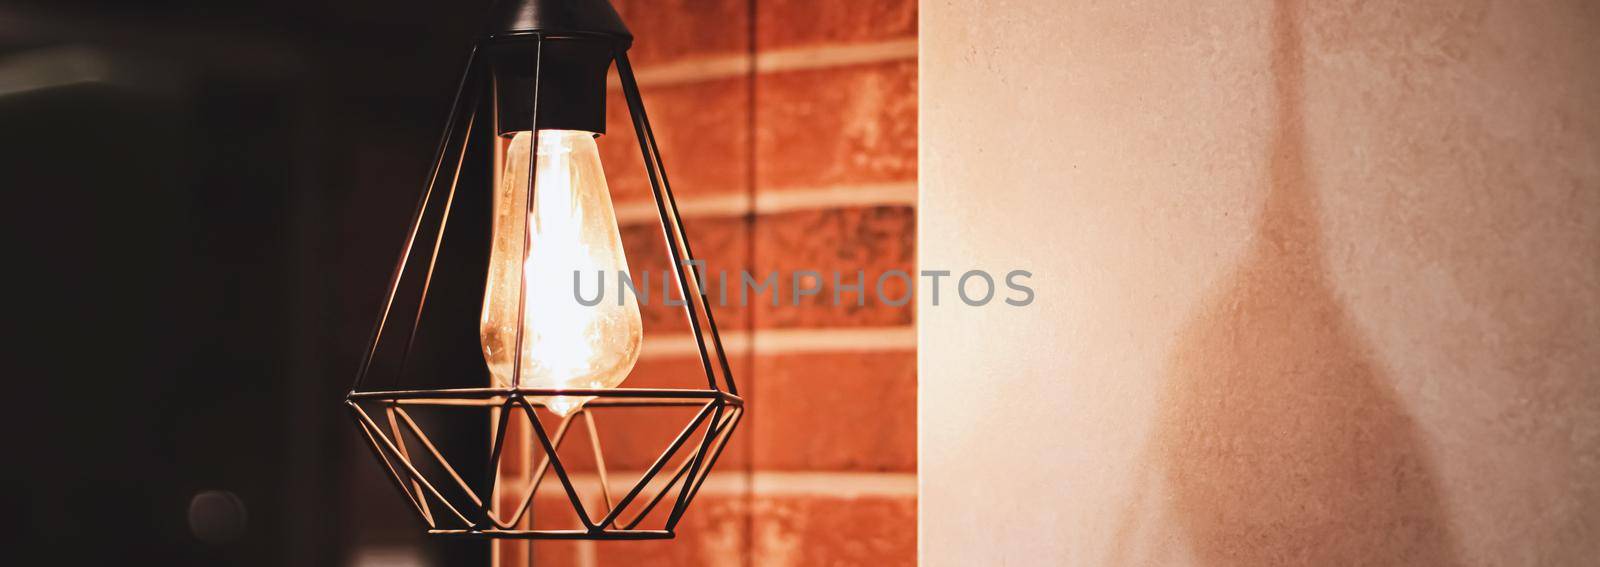 Pendant industrial lamps in loft interior with dark brick walls, modern design and home decor concept